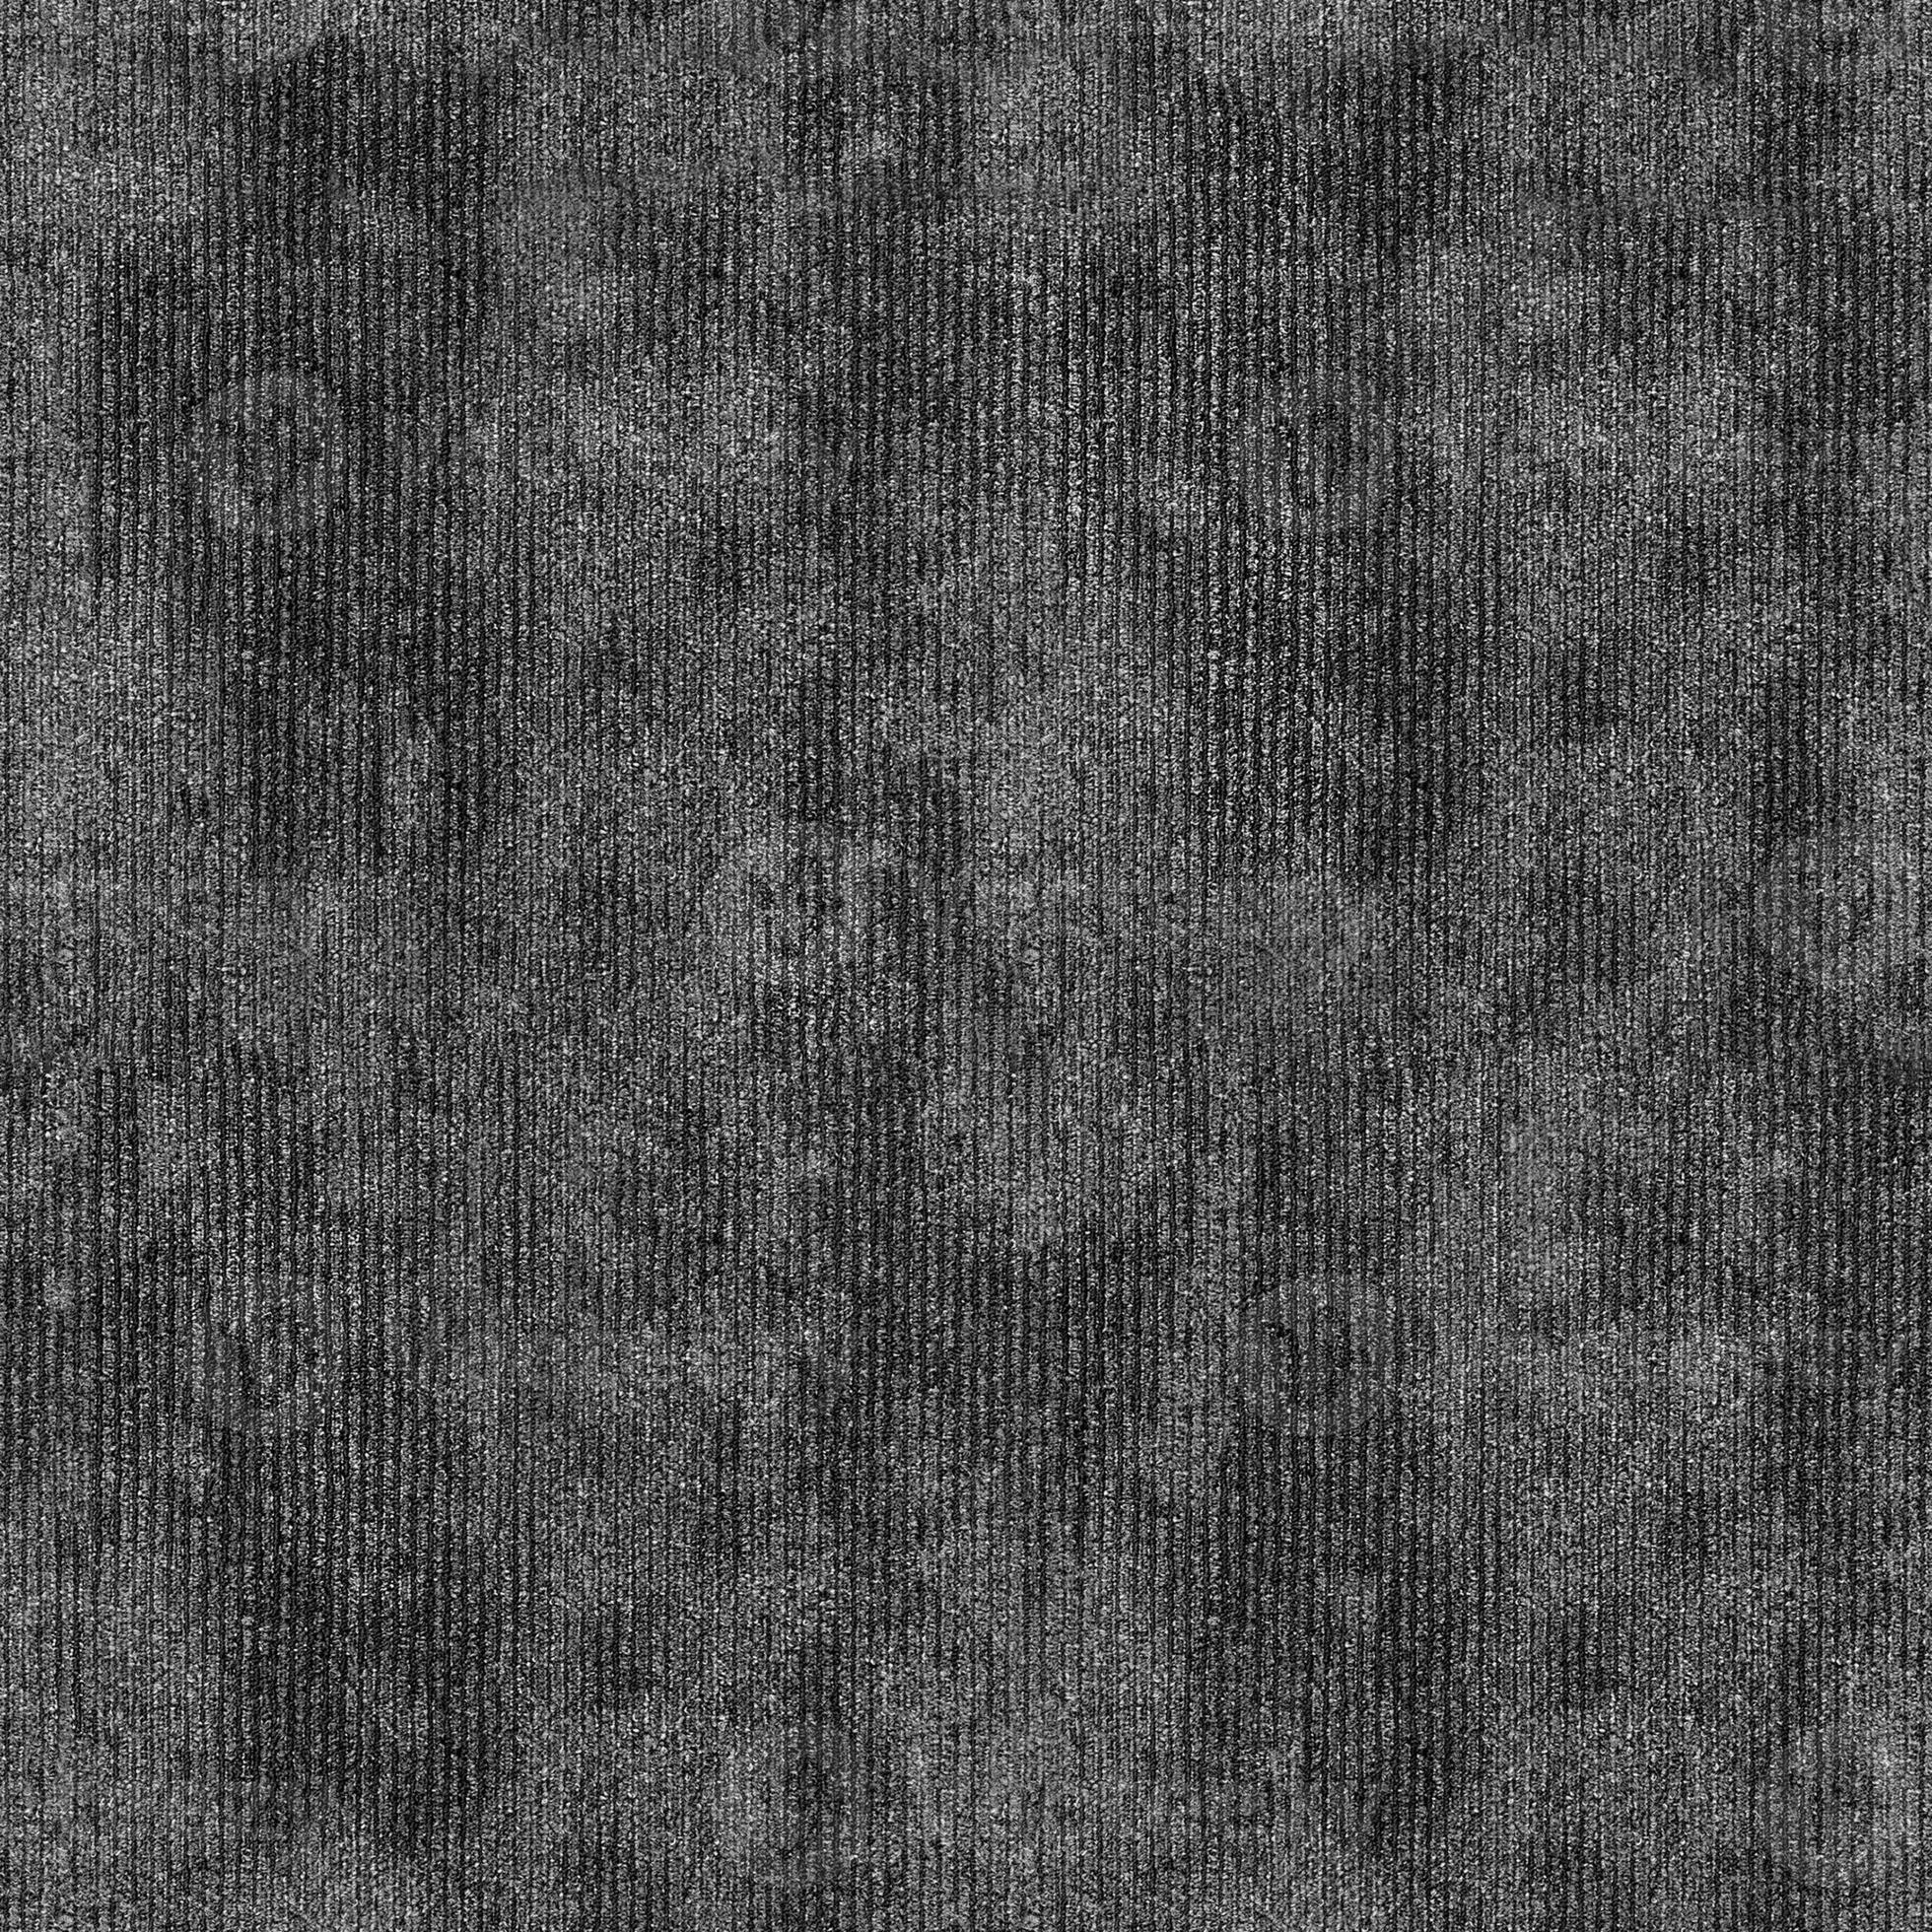 Seamless contemporary carpet texture 30248618 Stock Photo at Vecteezy